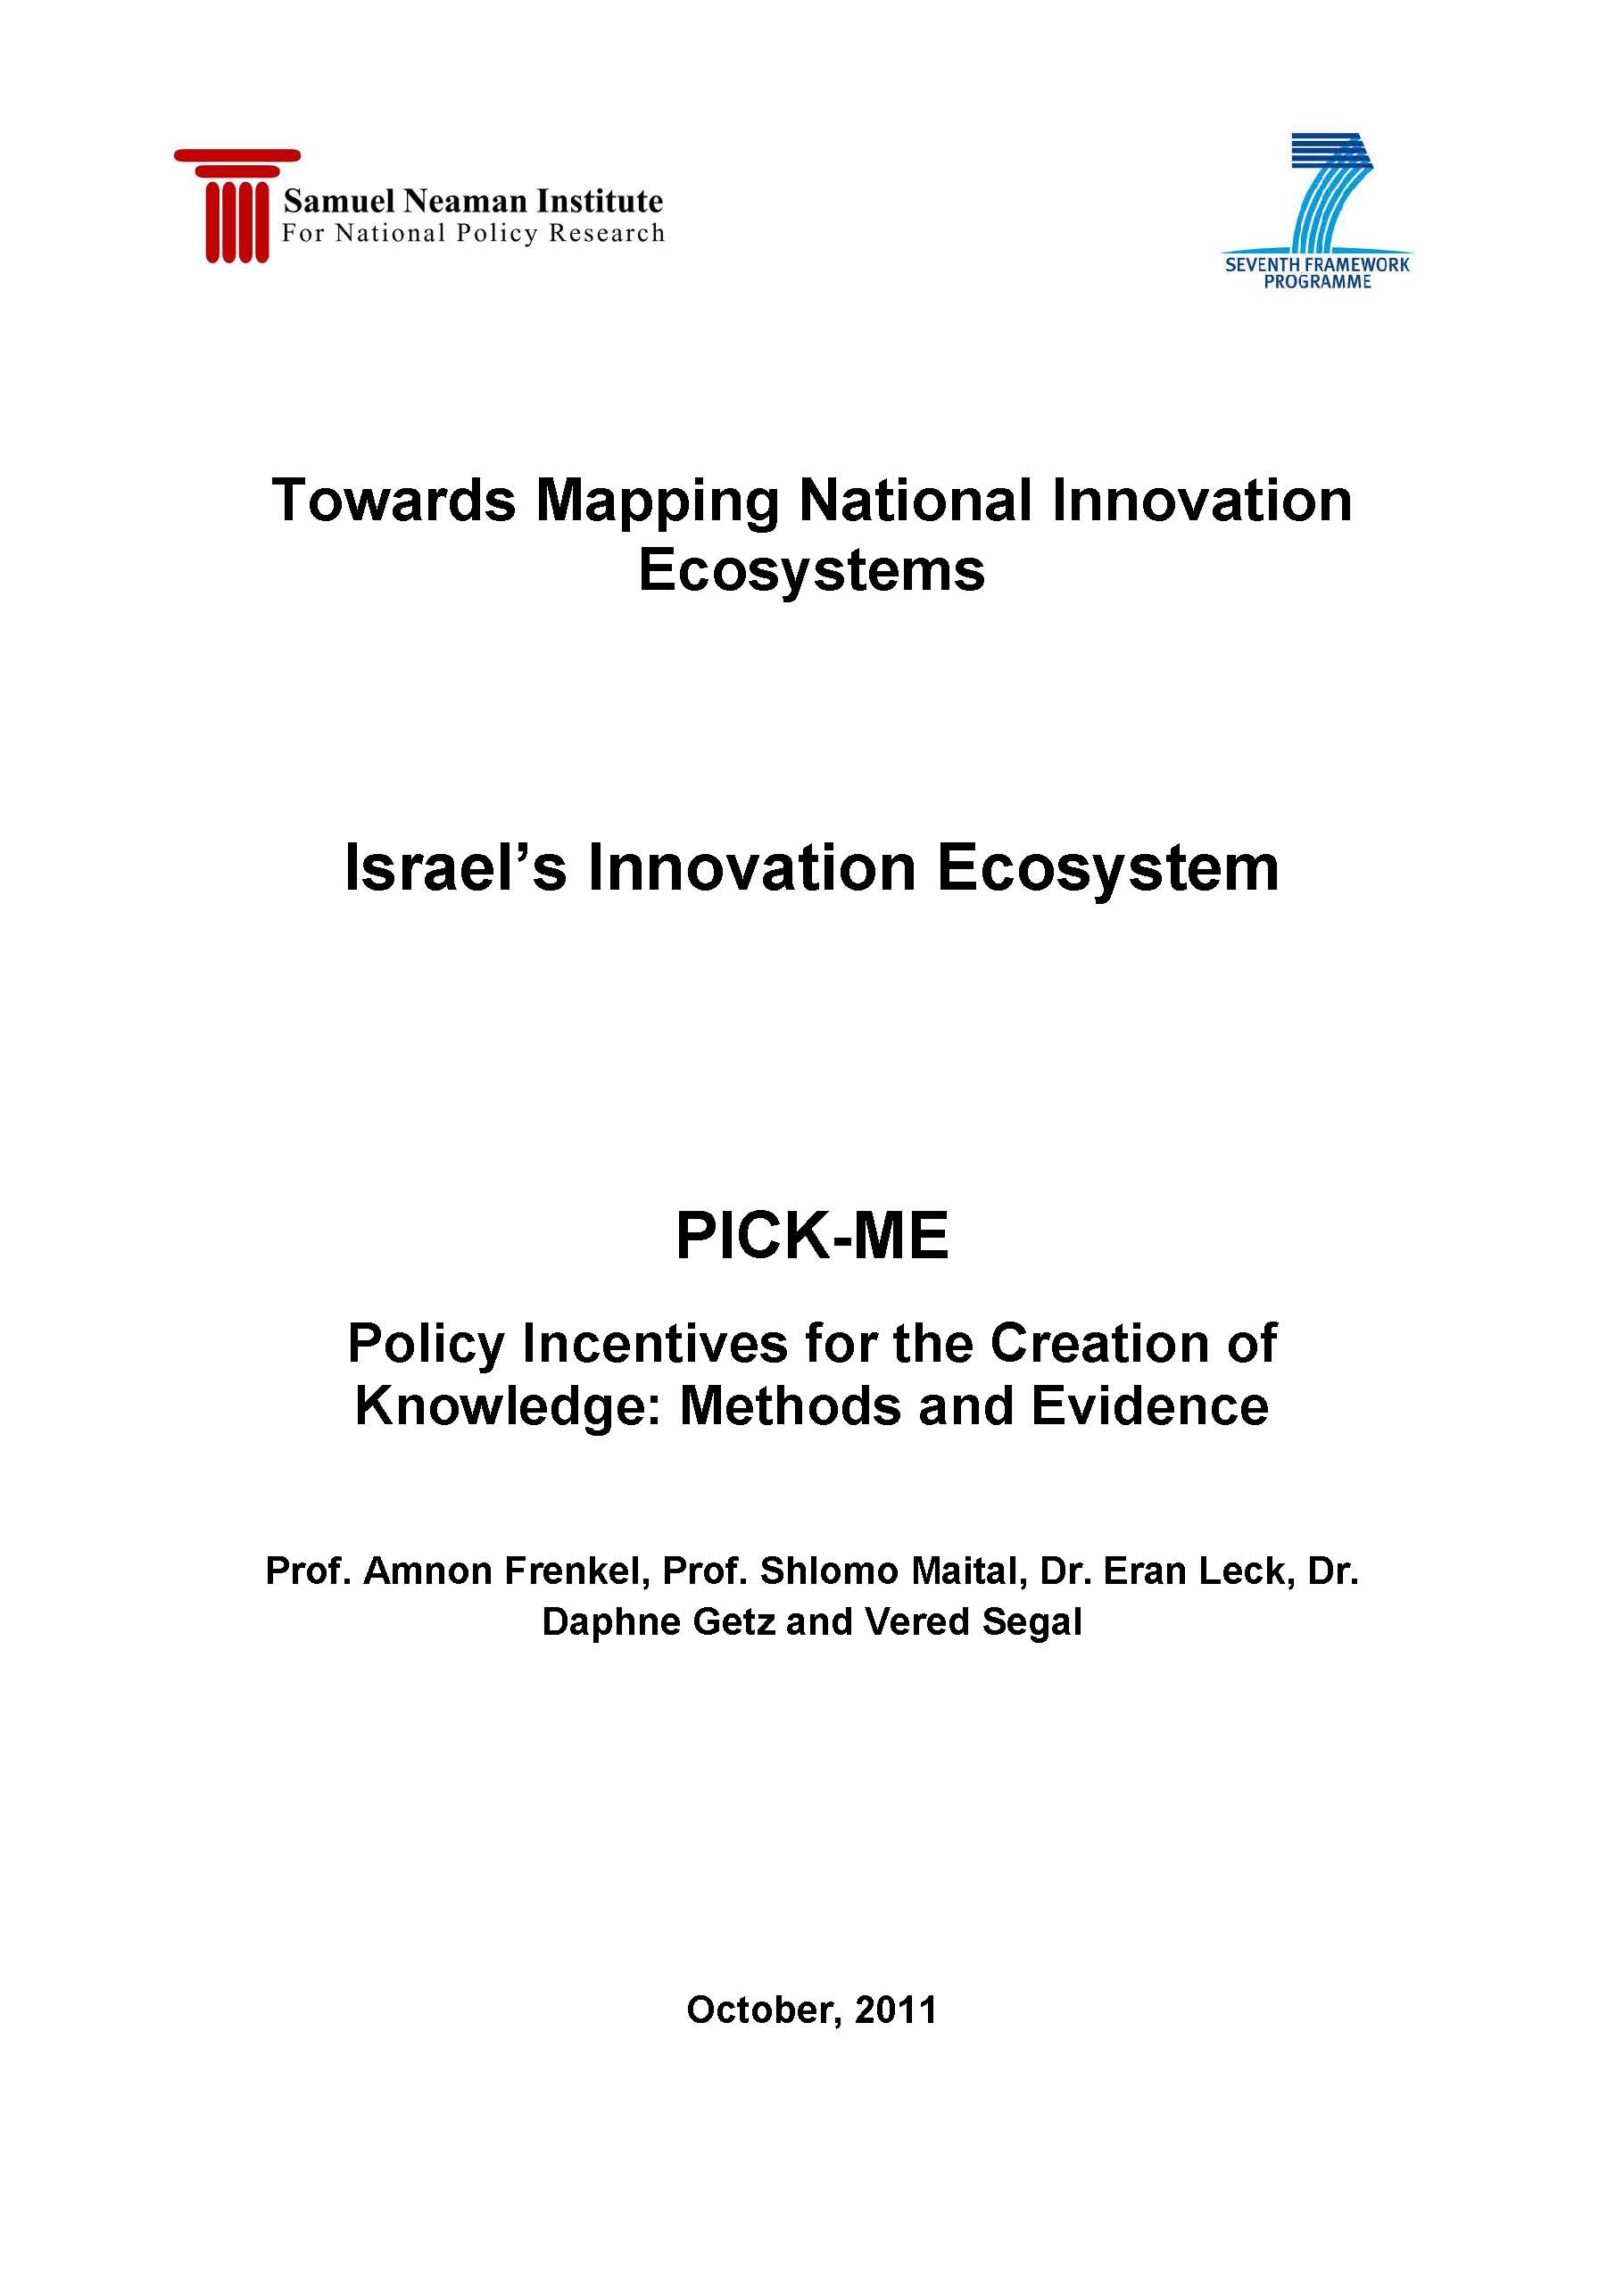 Towards Mapping National Innovation Ecosystem: Israel